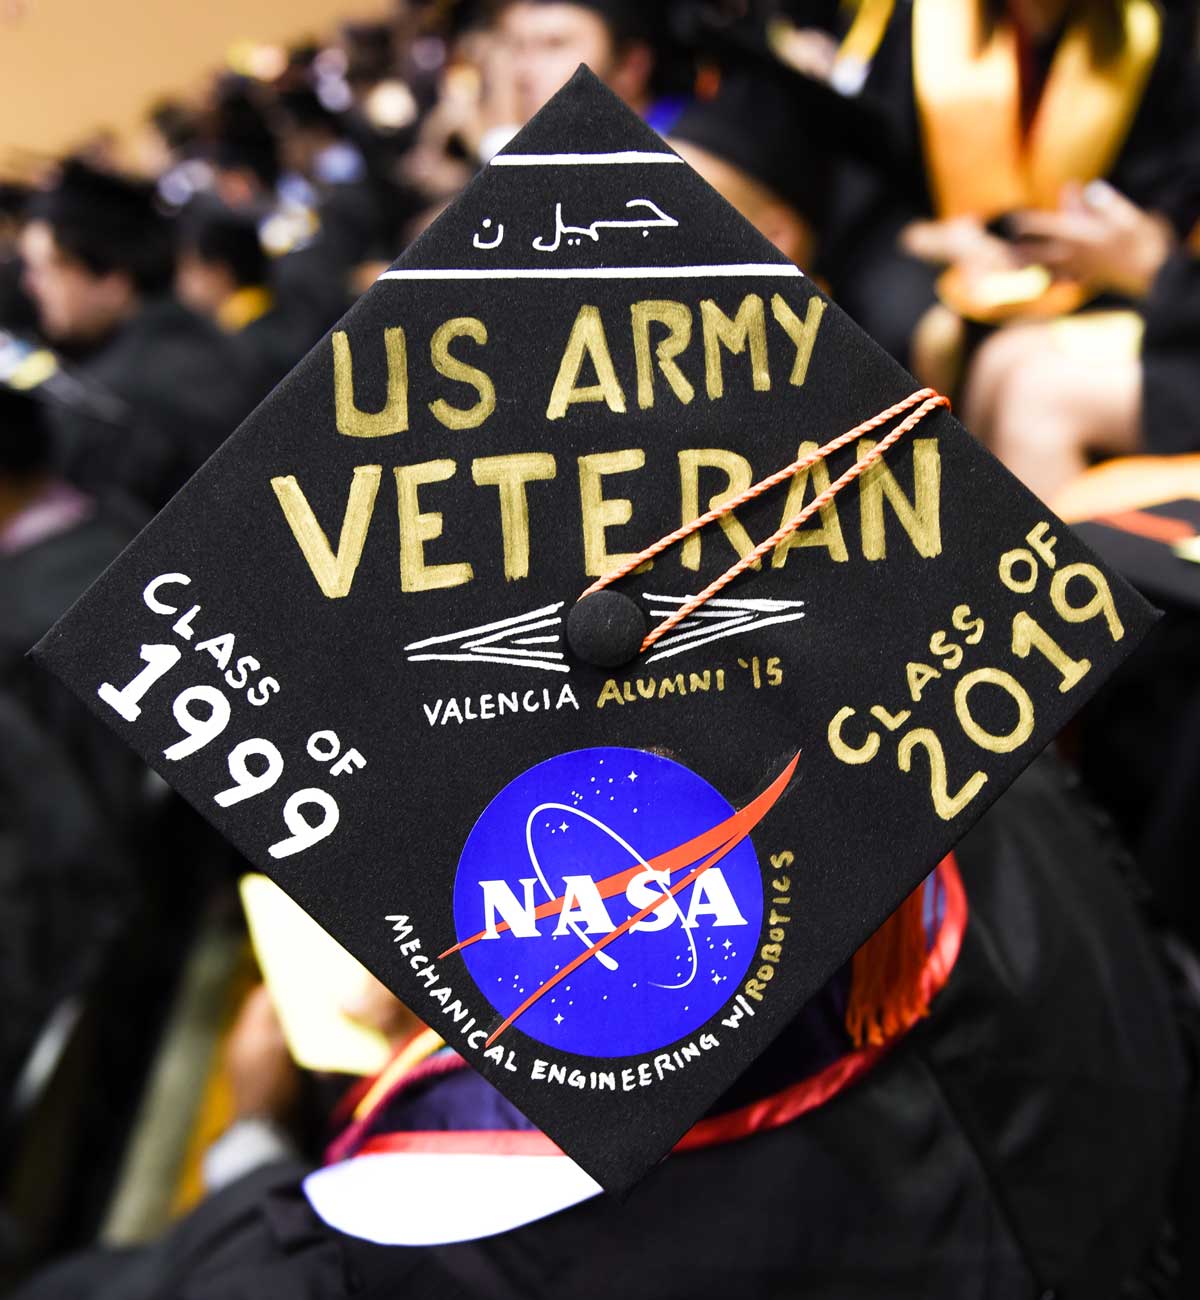 Grad cap decorated with text: US Army Veteran and NASA logo